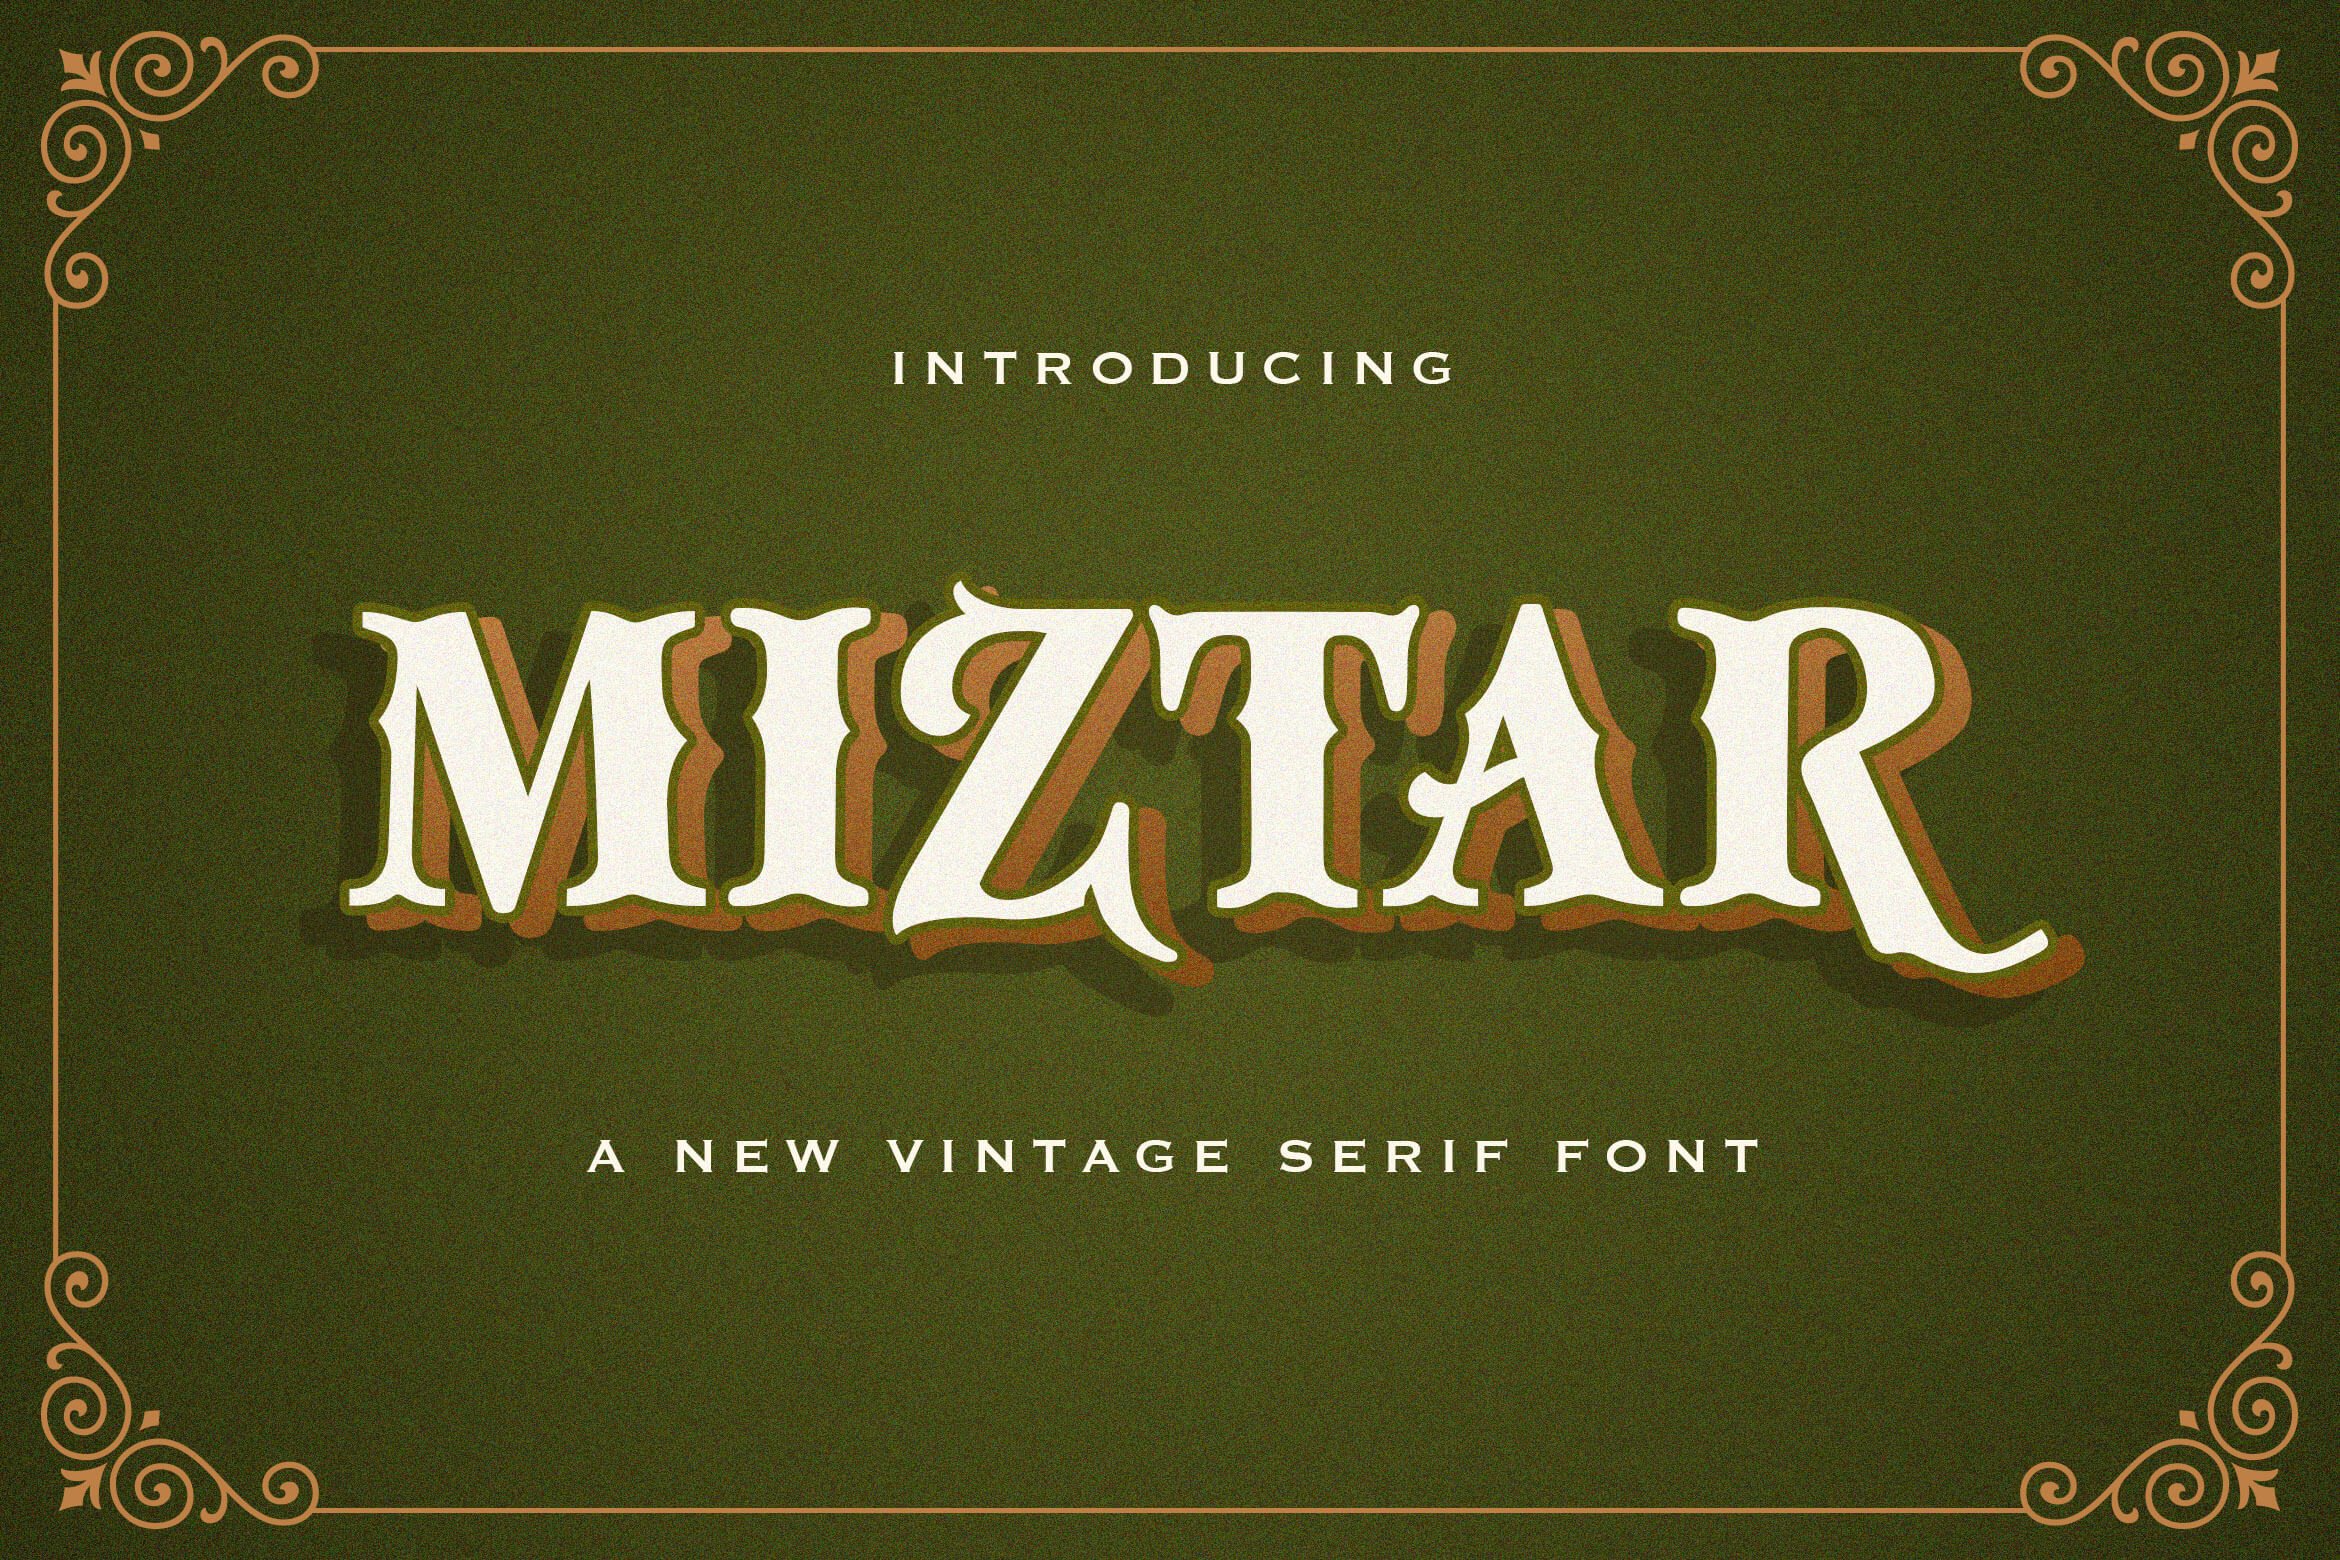 Miztar - Victorian Style Font cover image.